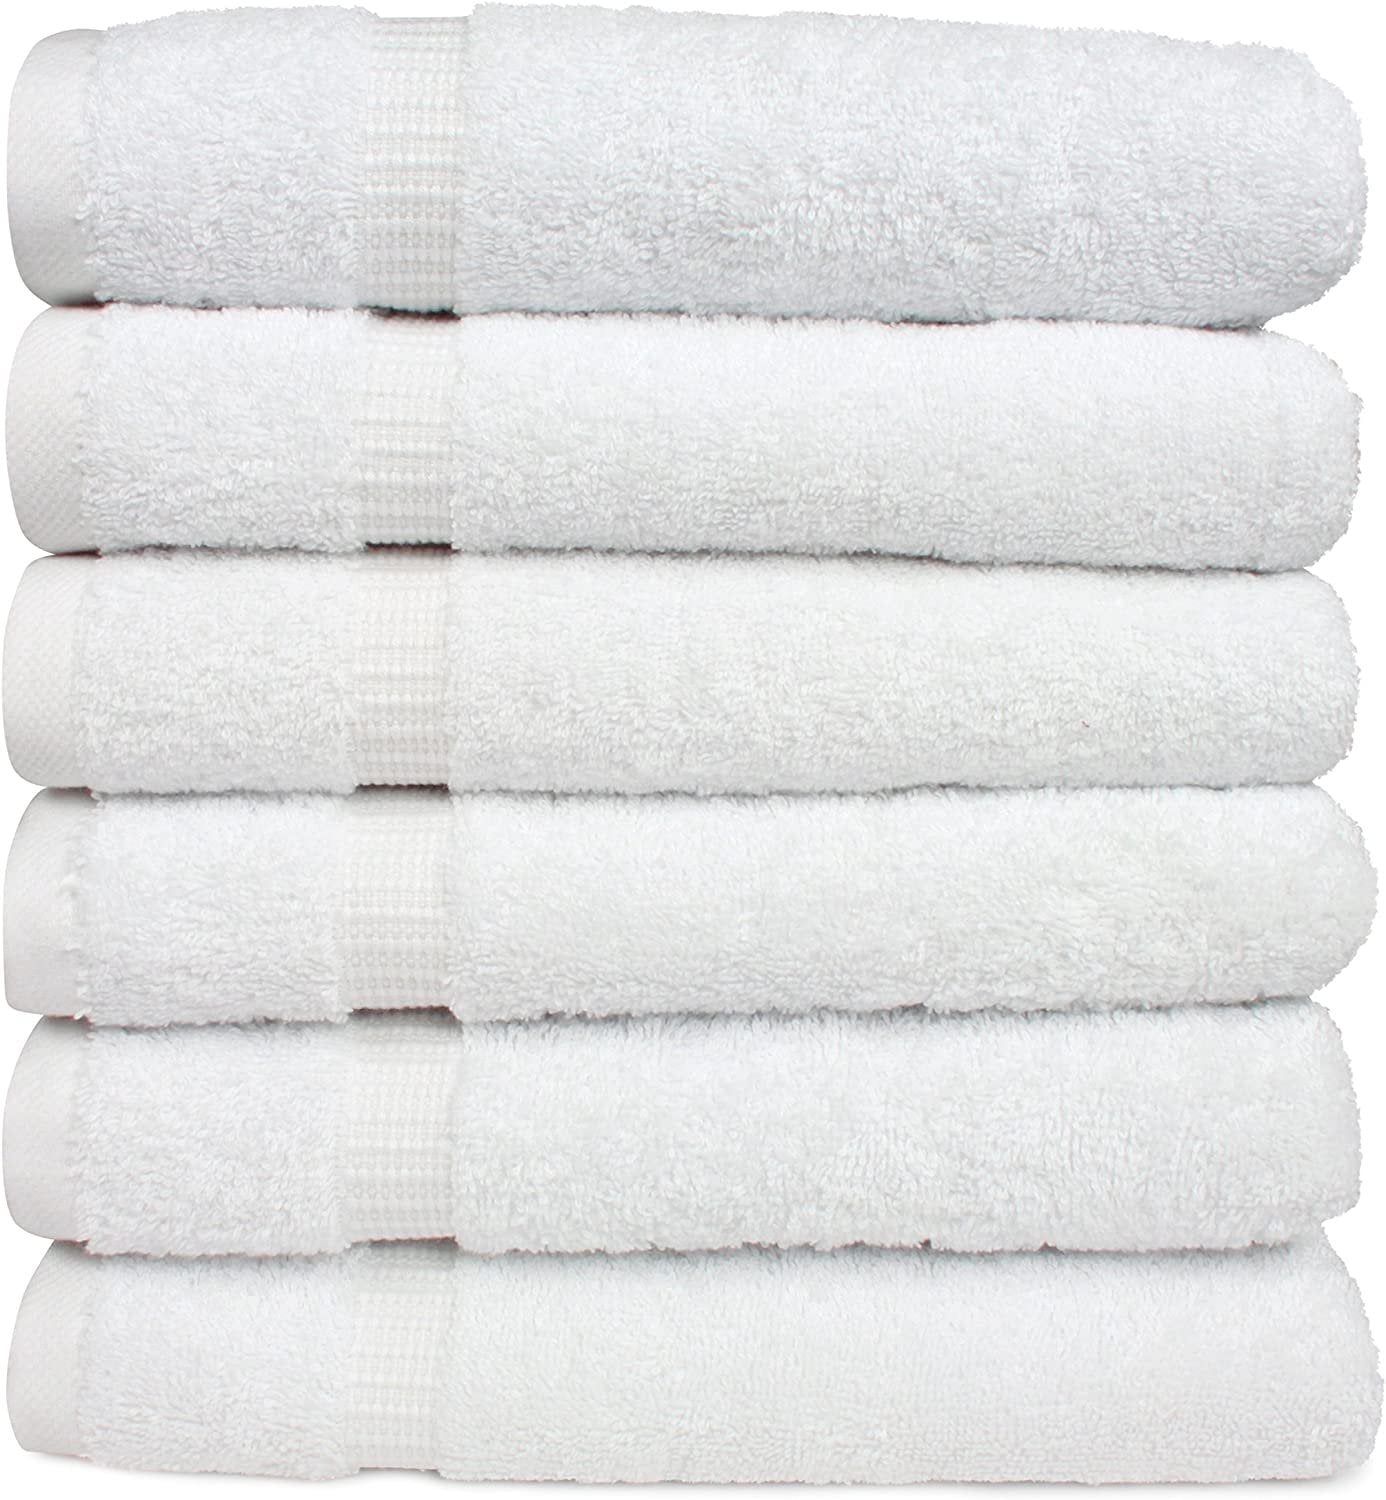 White Classic Luxury 100% Cotton Hand Towels Set of 6 - 16x30 Aqua